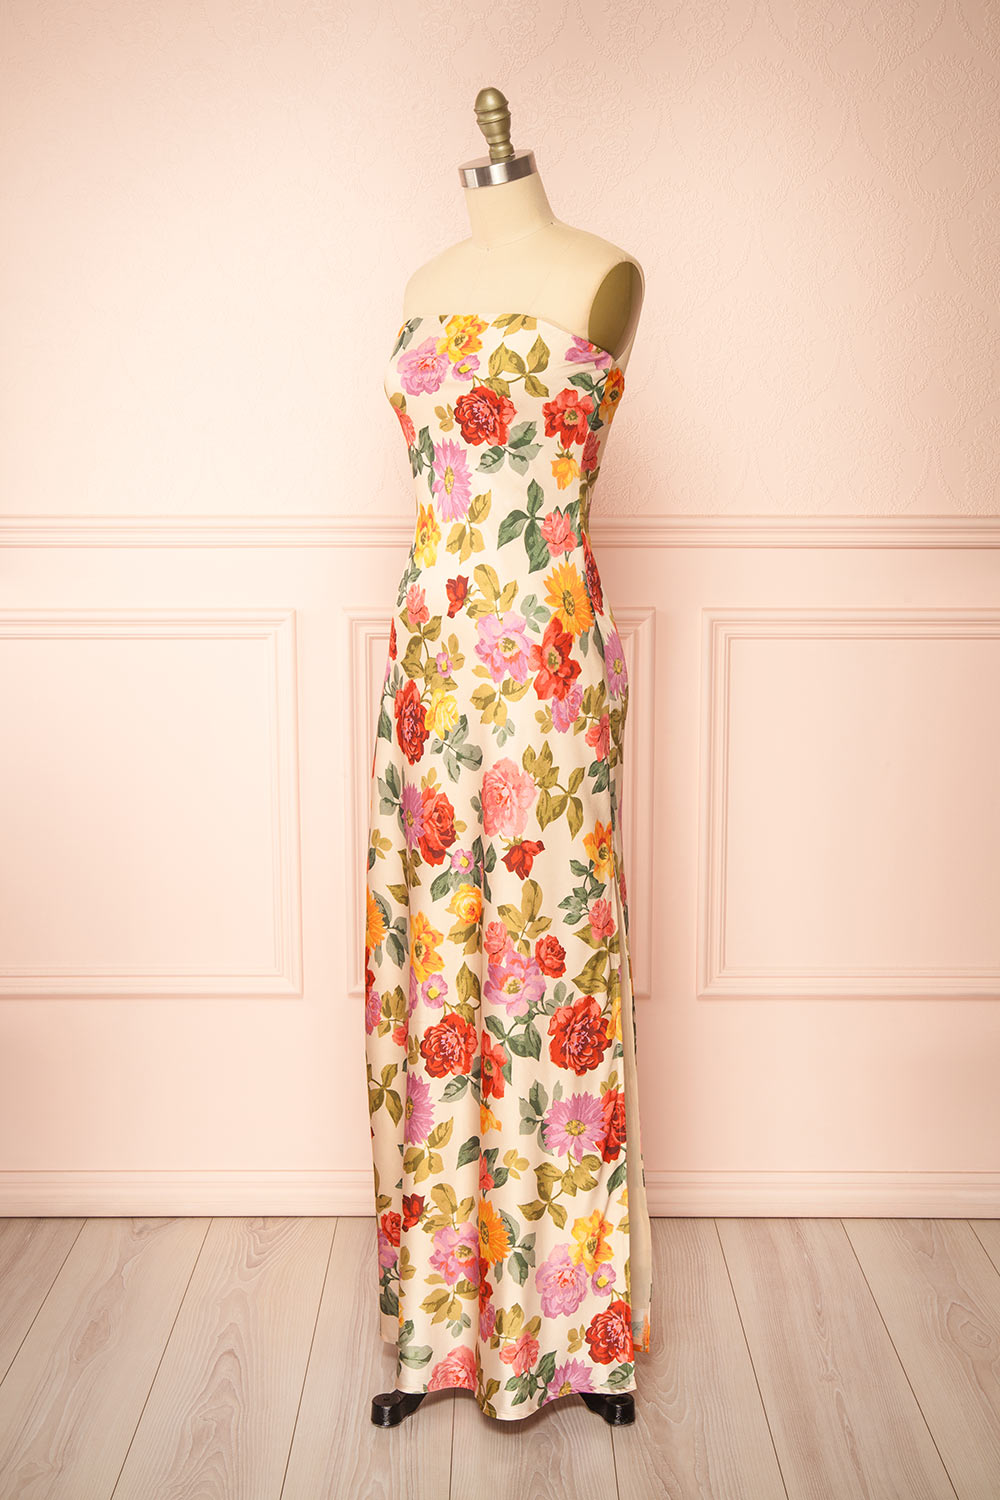 Larosita Floral Satin Strapless Dress | Boutique 1861 side view